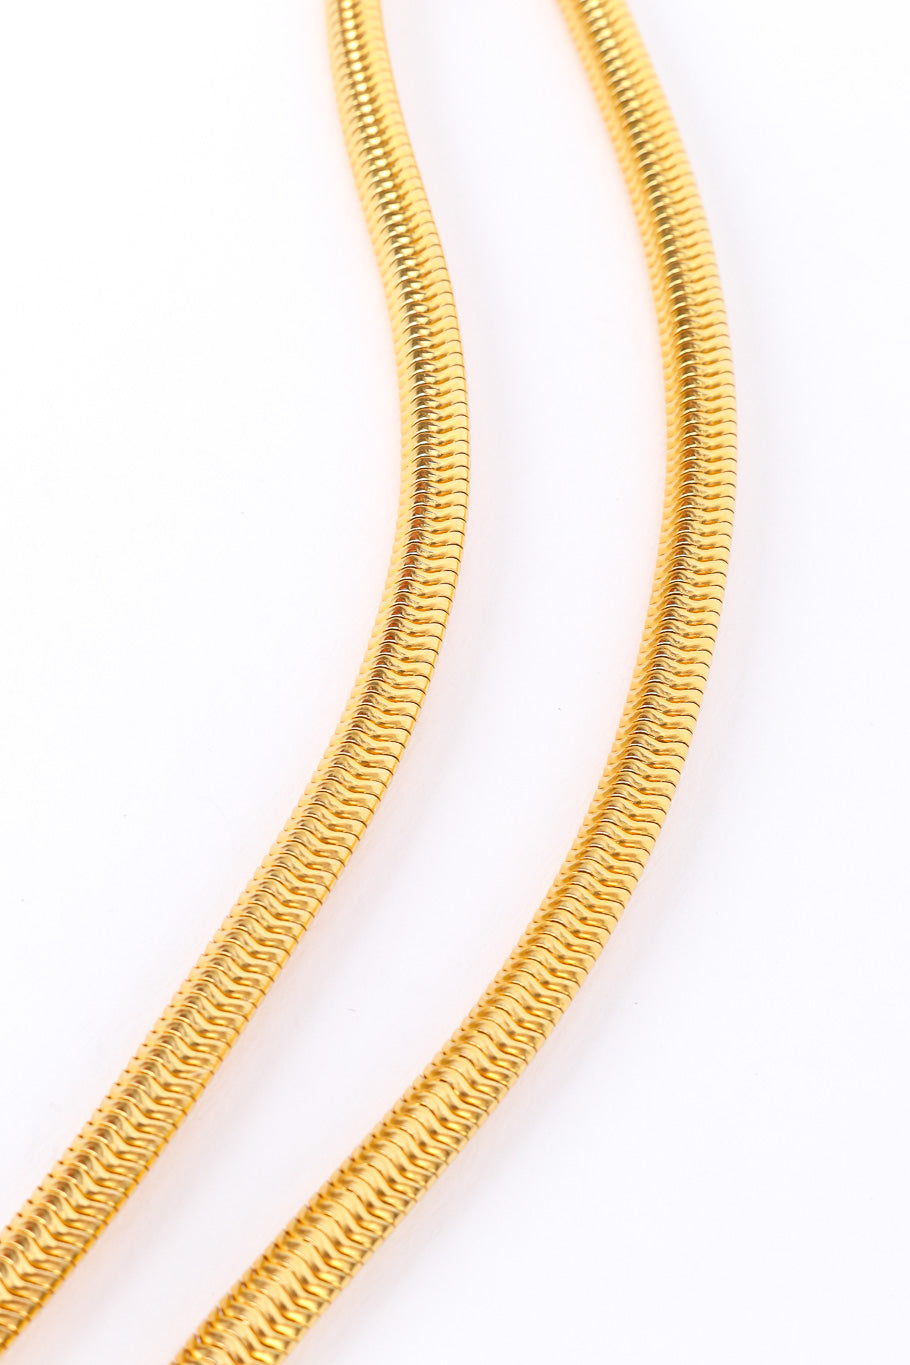 Vintage Pierre Cardin Revolving Charm Tablet Necklace snake chain closeup @Recessla